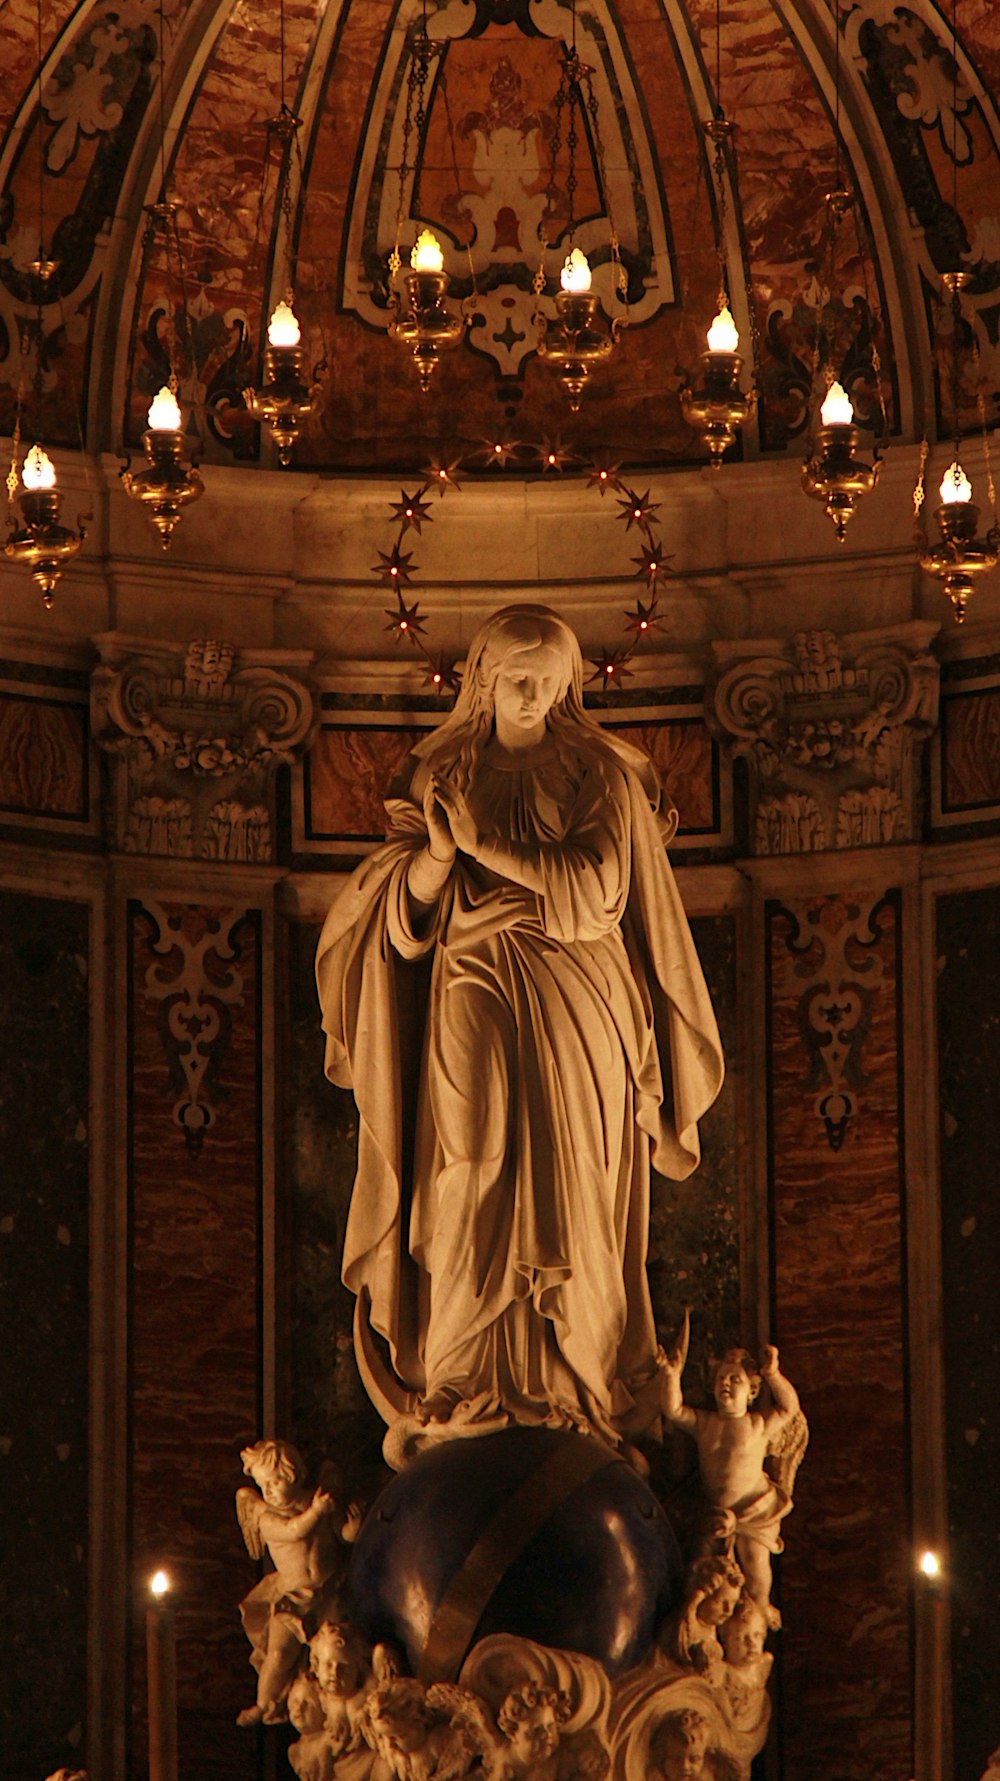 woman in white dress statue